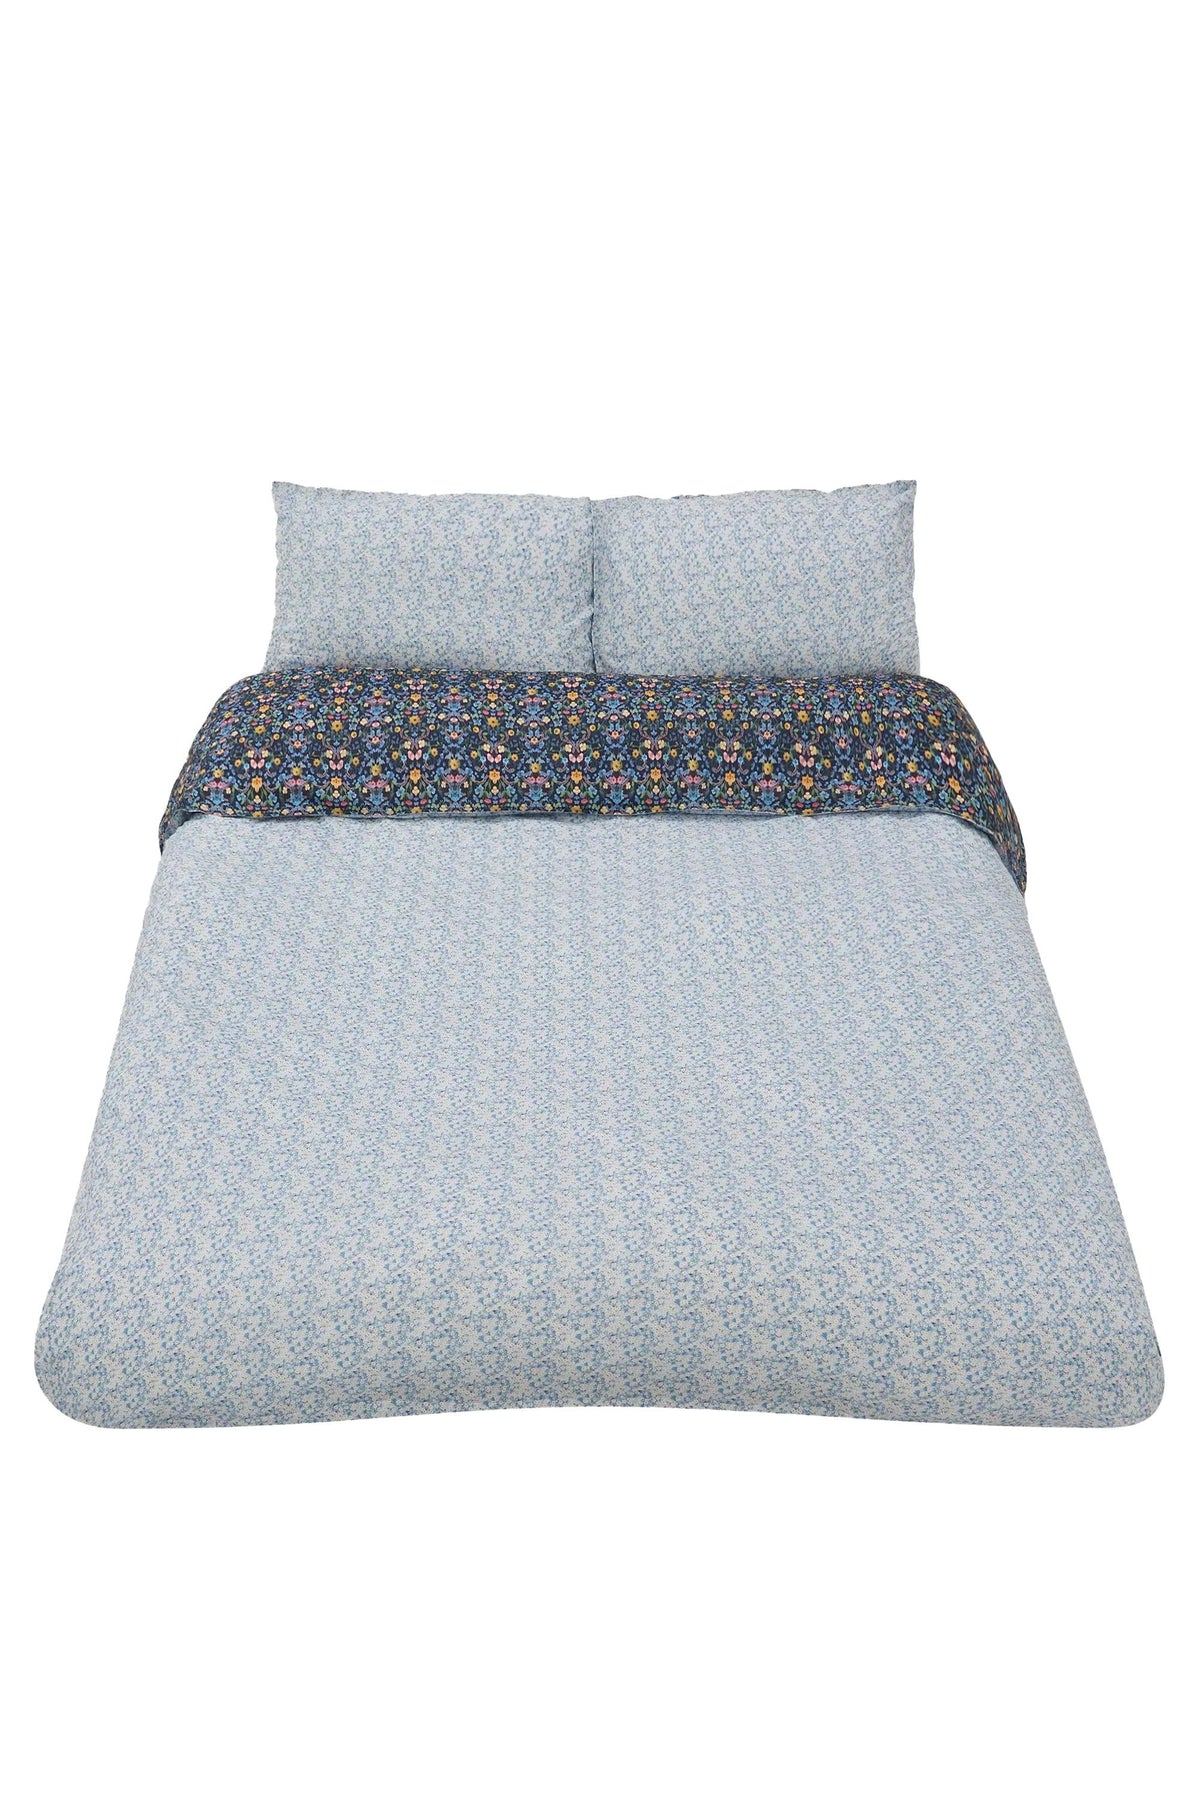 Bedding made with Liberty Fabric MITSI VALERIA BLUE & AURORA - Coco & Wolf